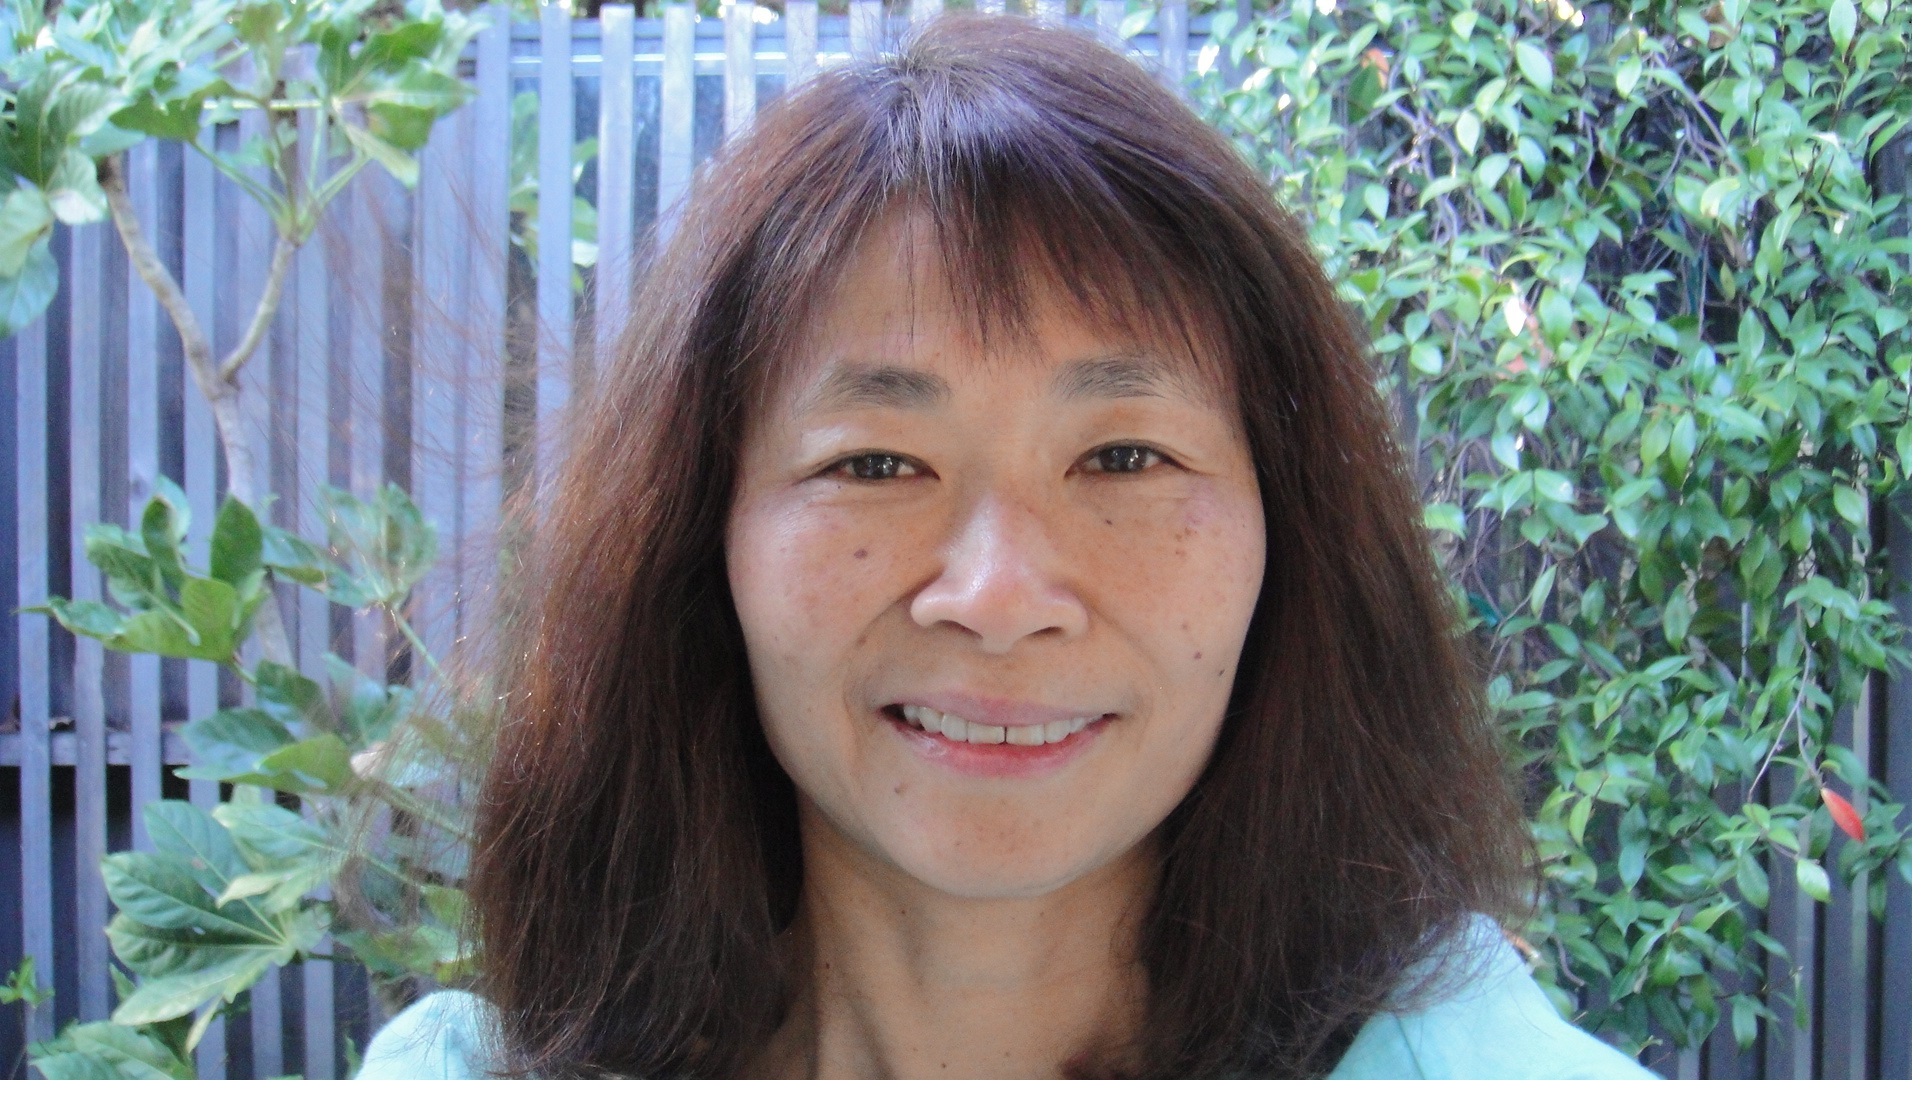 Ching Kwan Lee, a sociology professor at University of California, Los Angeles